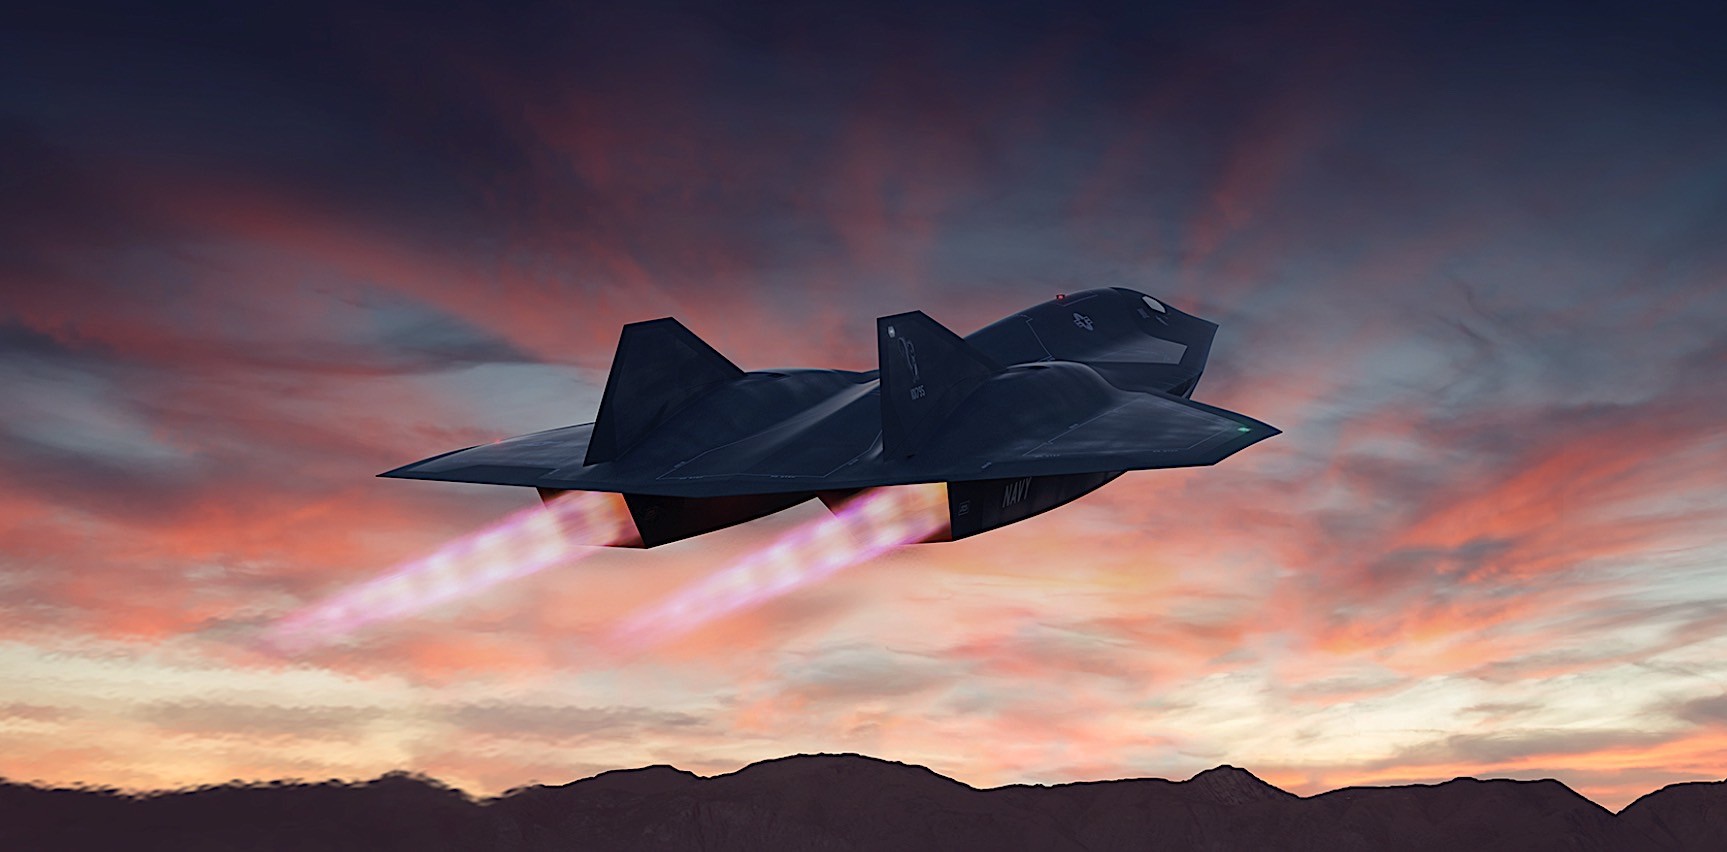 Top Gun: Maverick's Mach 10 Darkstar Is A Sign Of Military Aircraft To Come  - Autoevolution